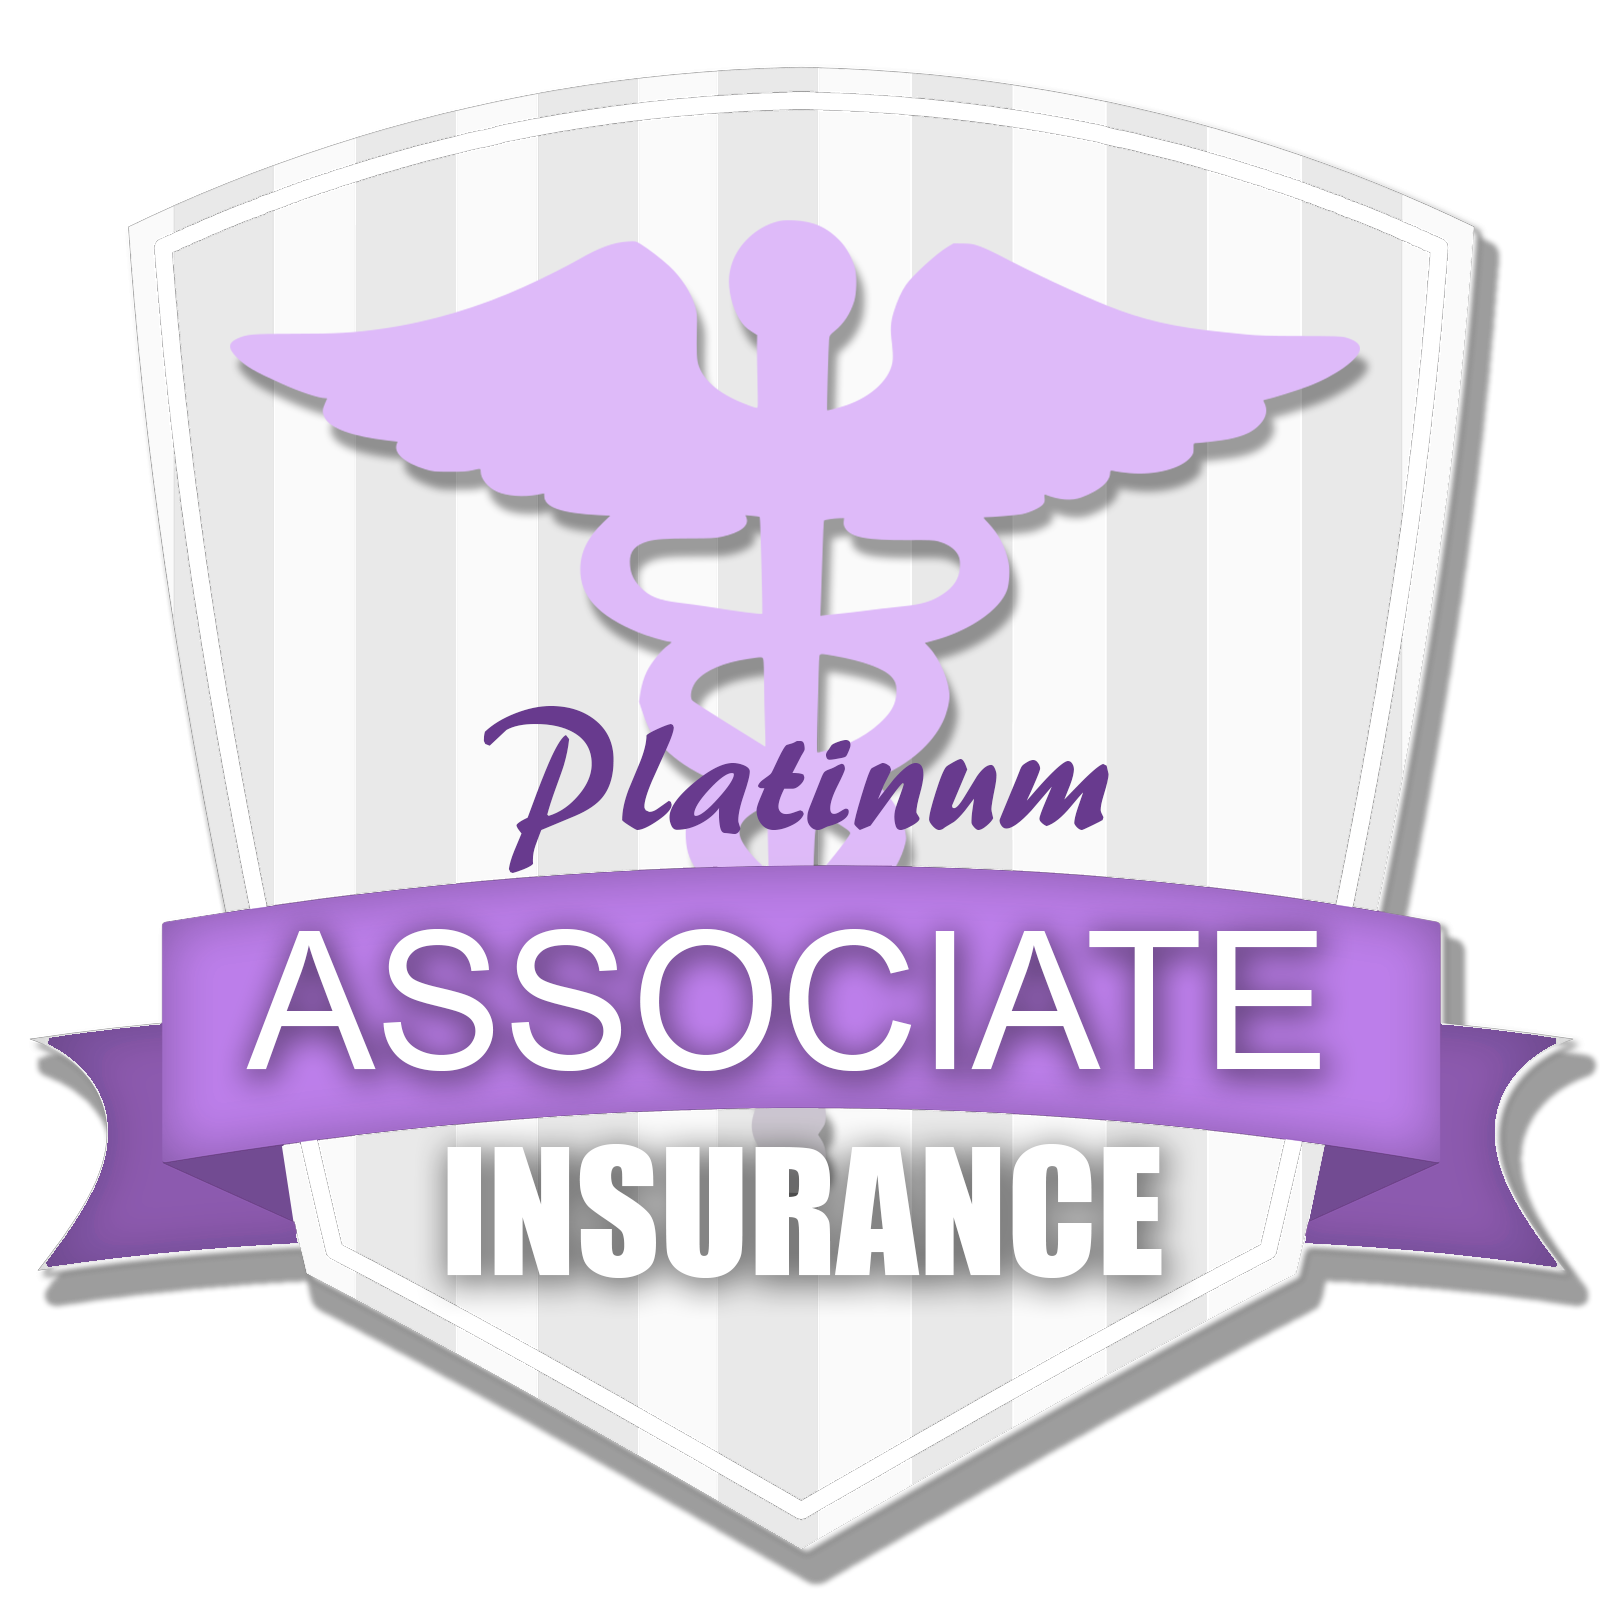 Associate Platinum Membership Insurance Package